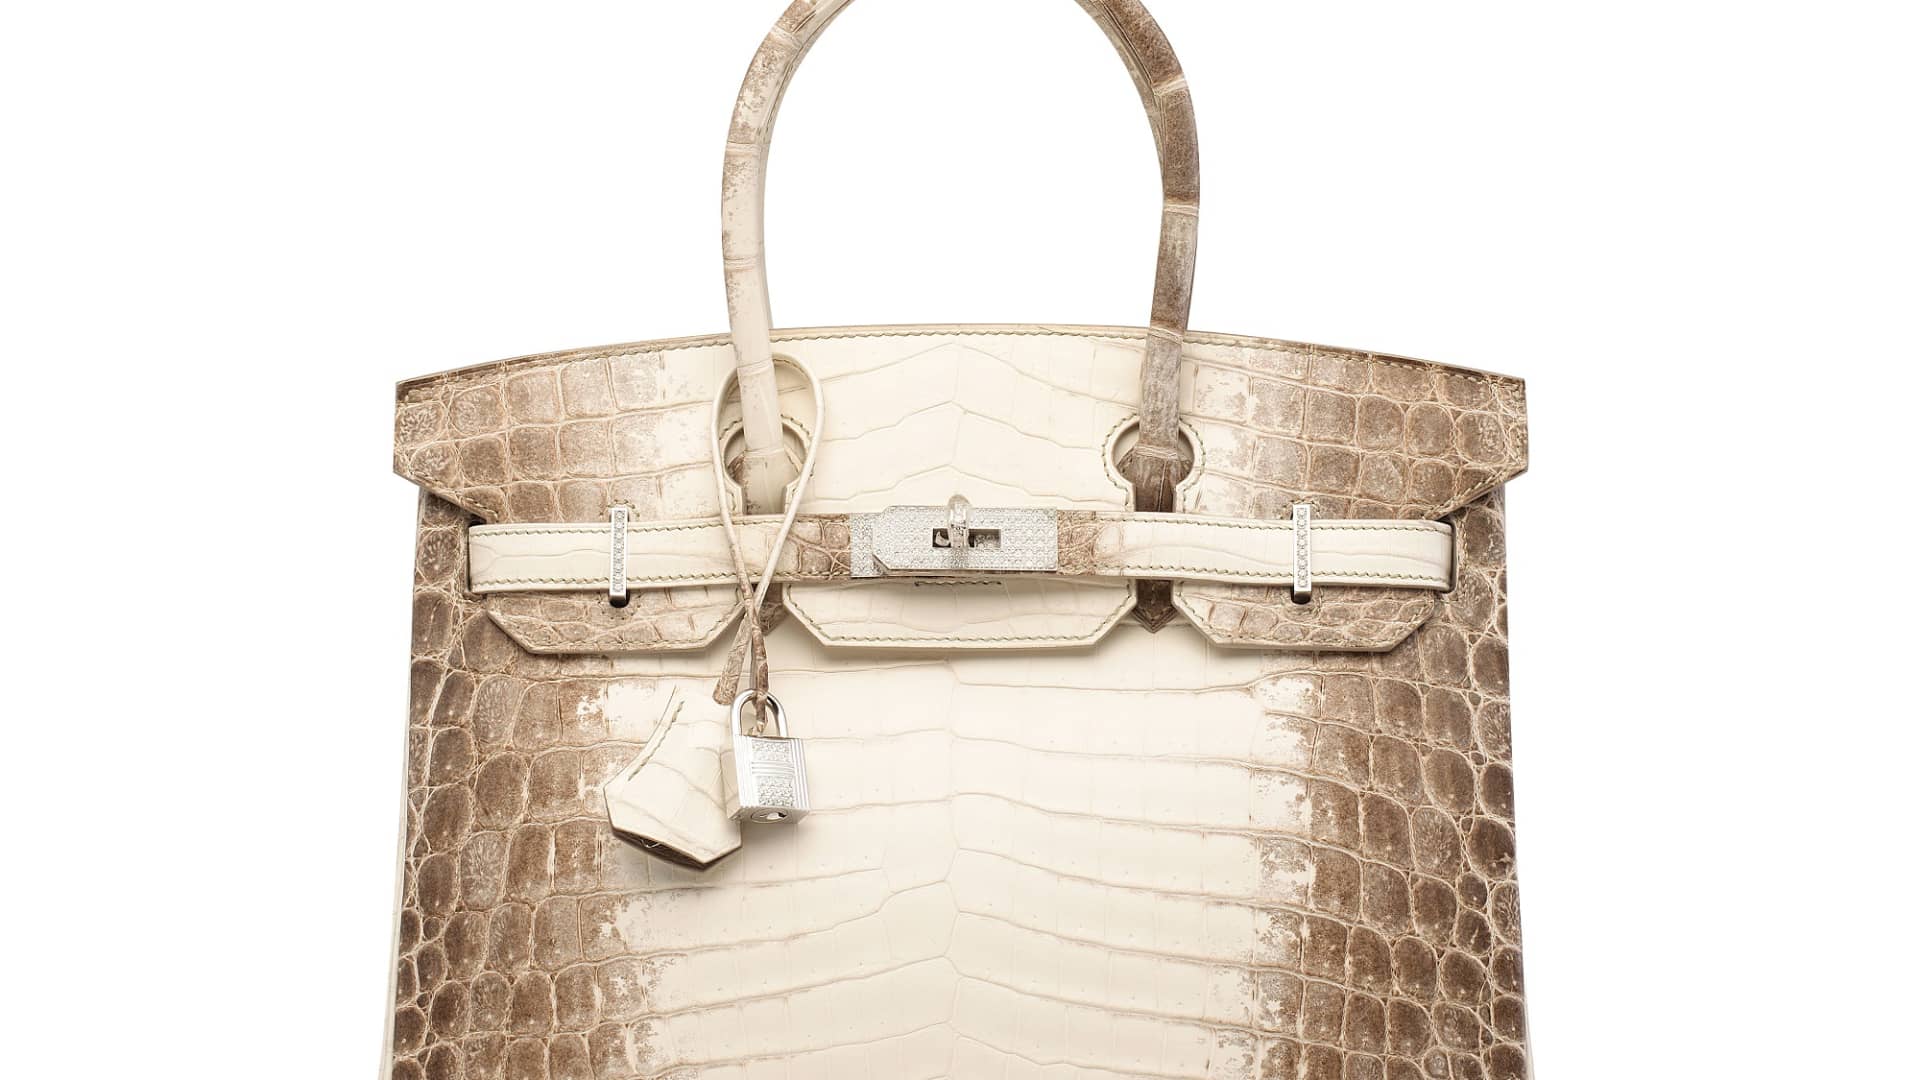 Crocodile Hermès Birkin bag loved by Kim Kardashian sells for $300,000 in  Hong Kong